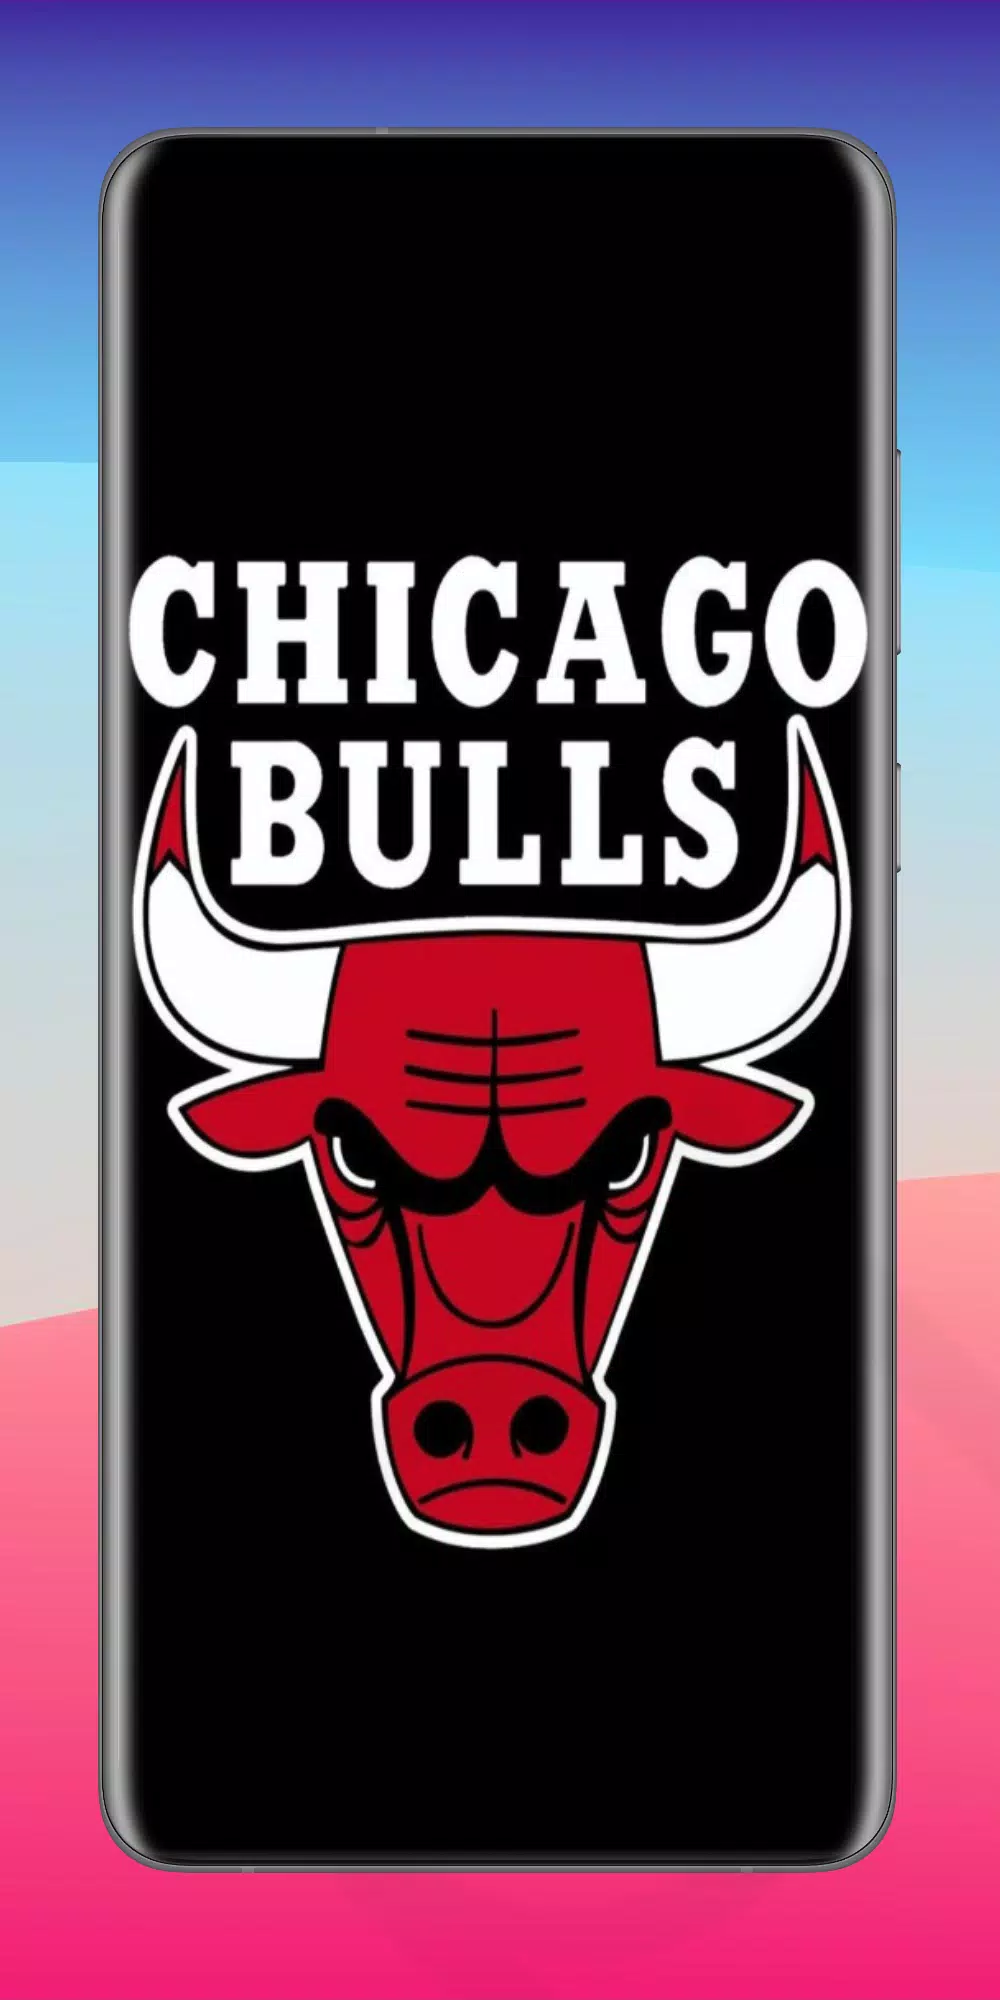 Download do APK de Chicago Bulls: Wallpapers, Games & more para Android